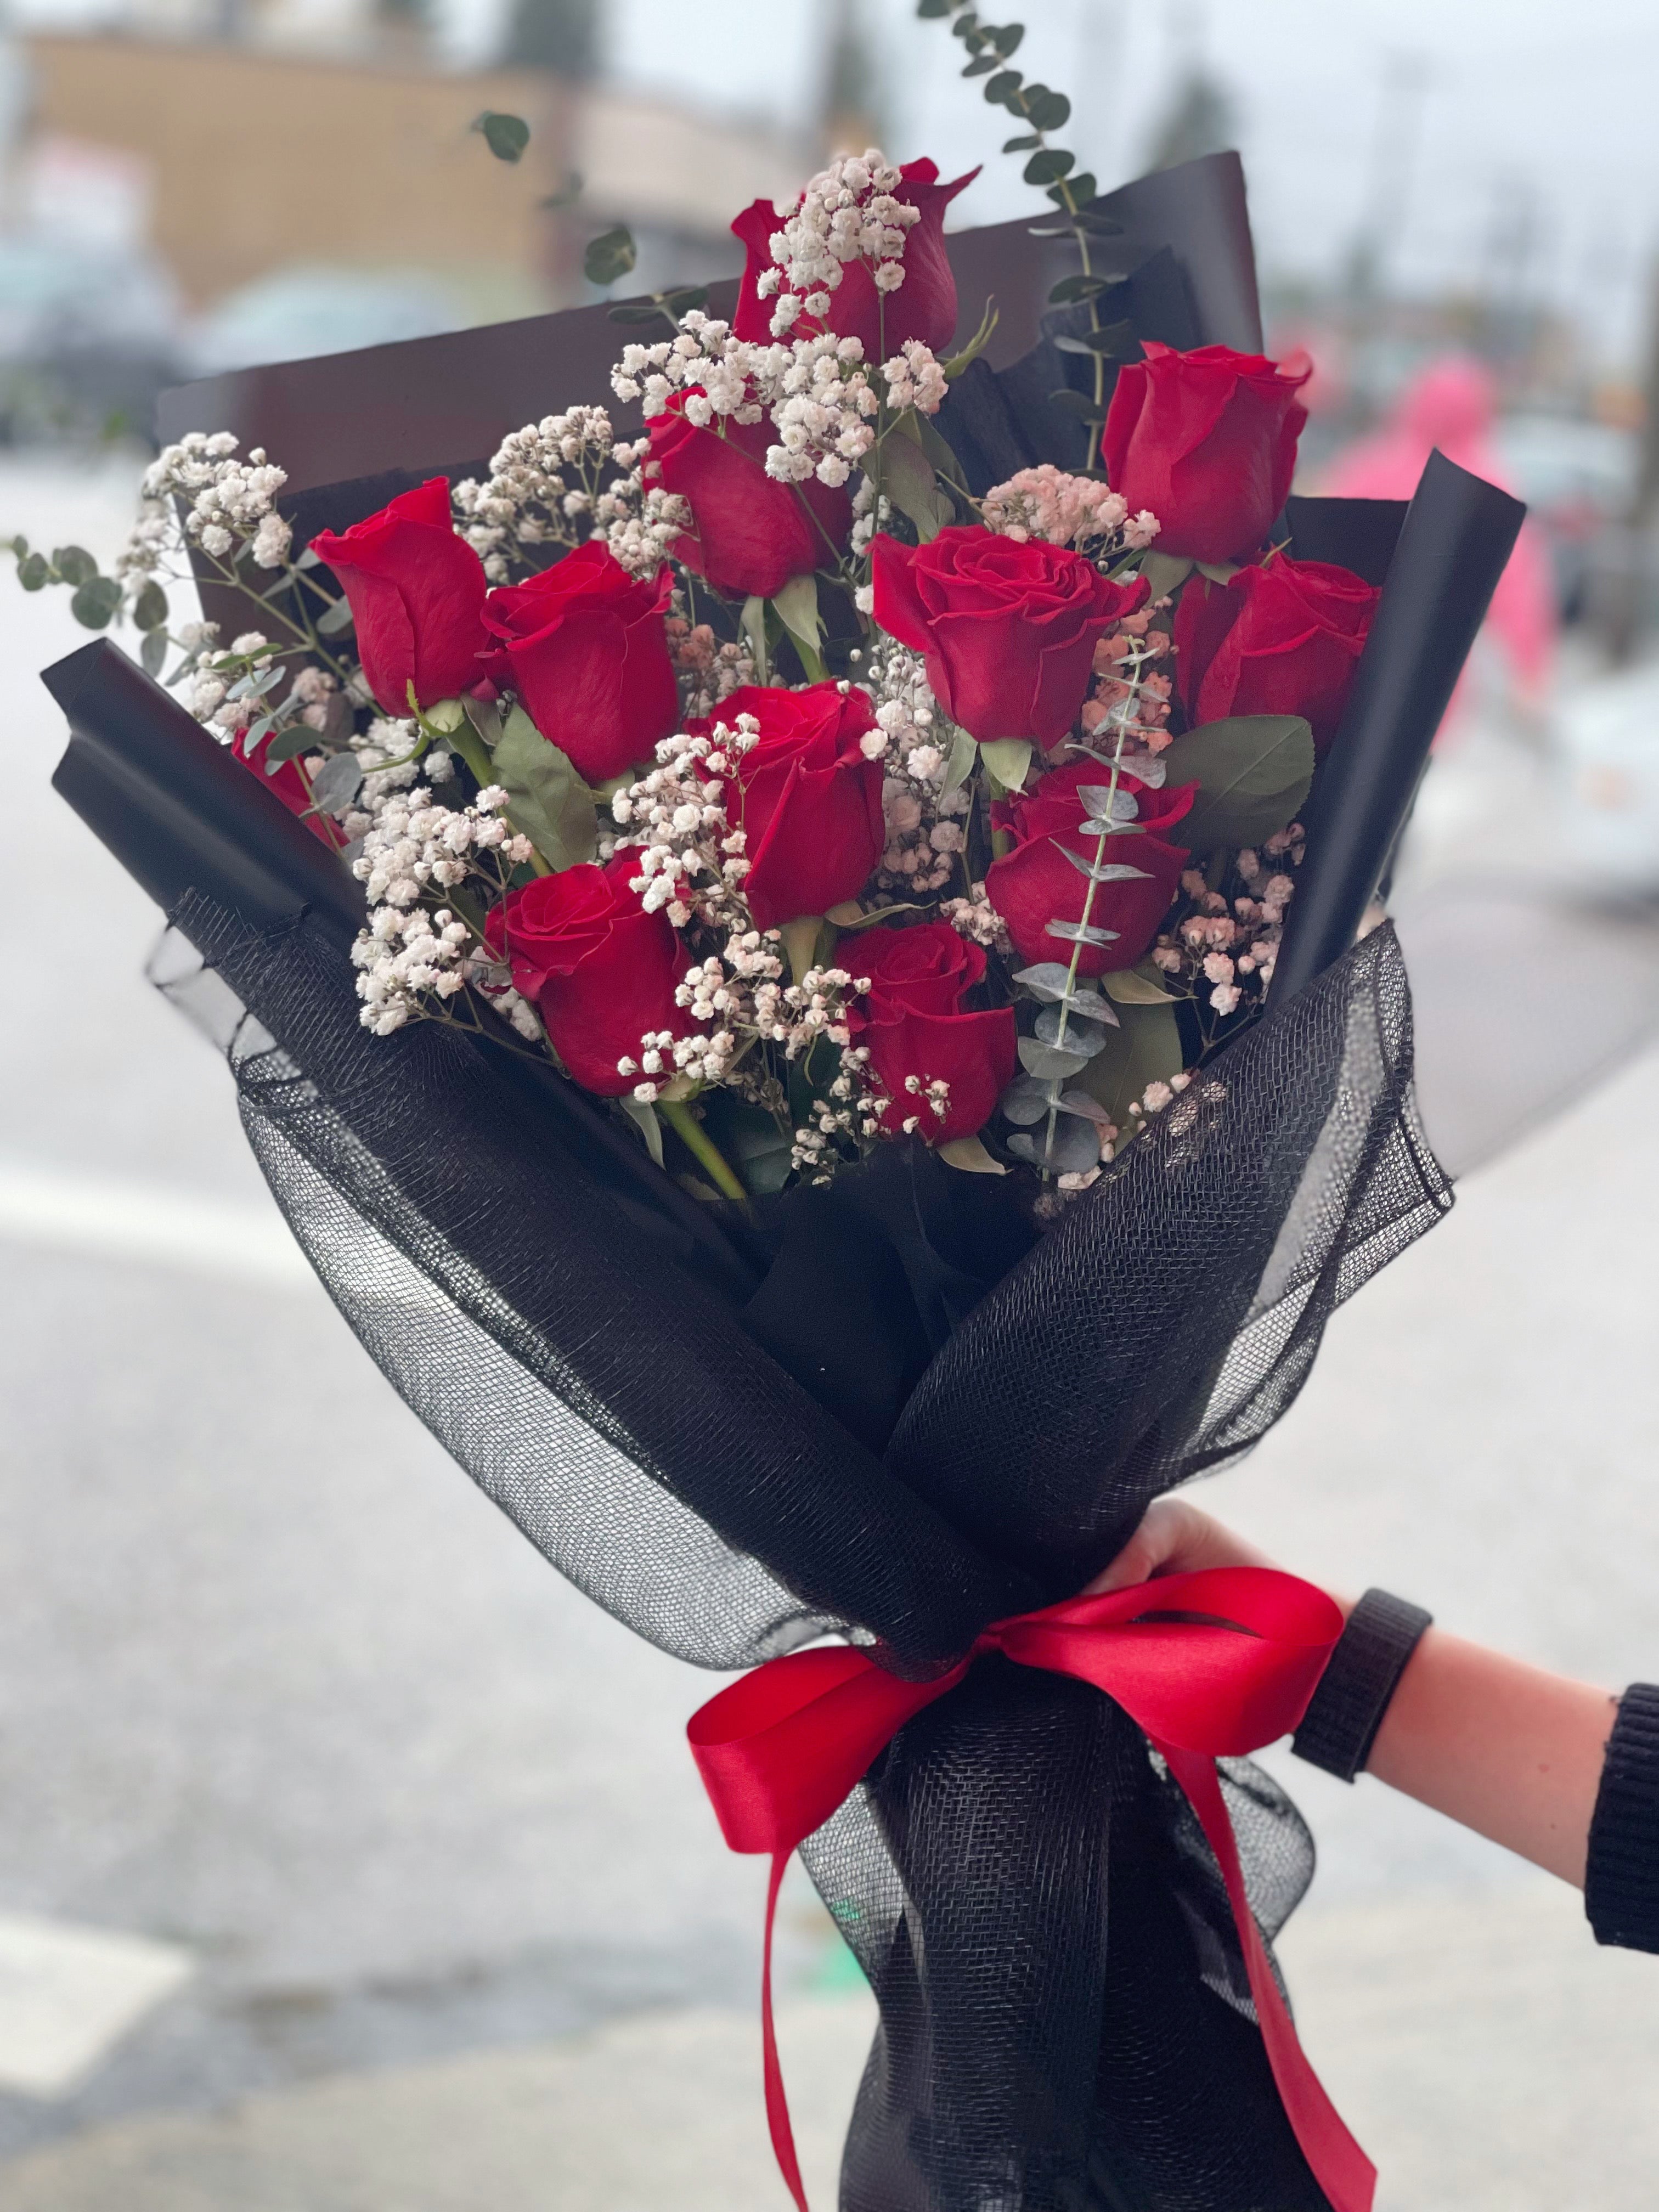 Romantic Red Bouquet